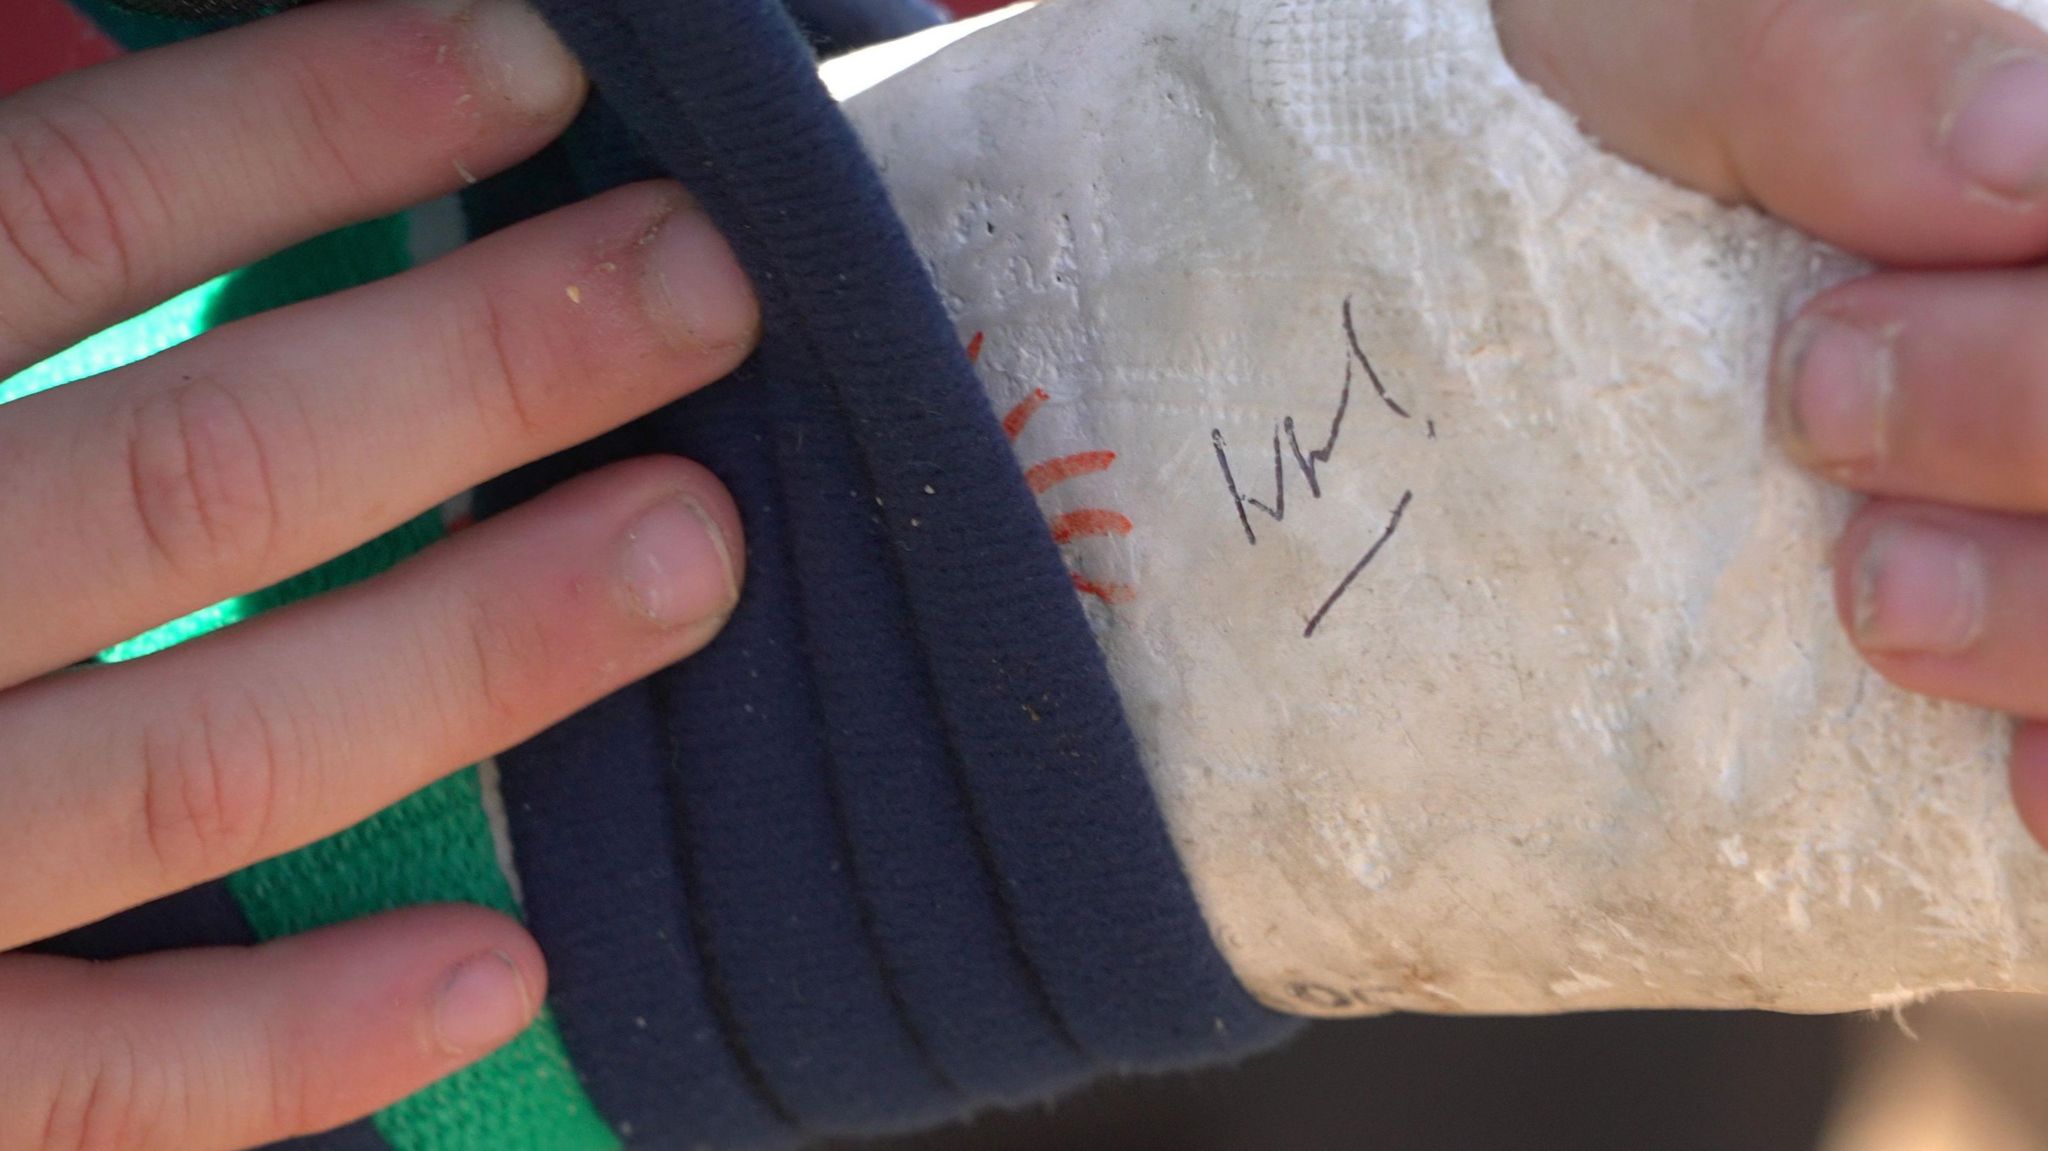 Prince William's signature on a plaster cast